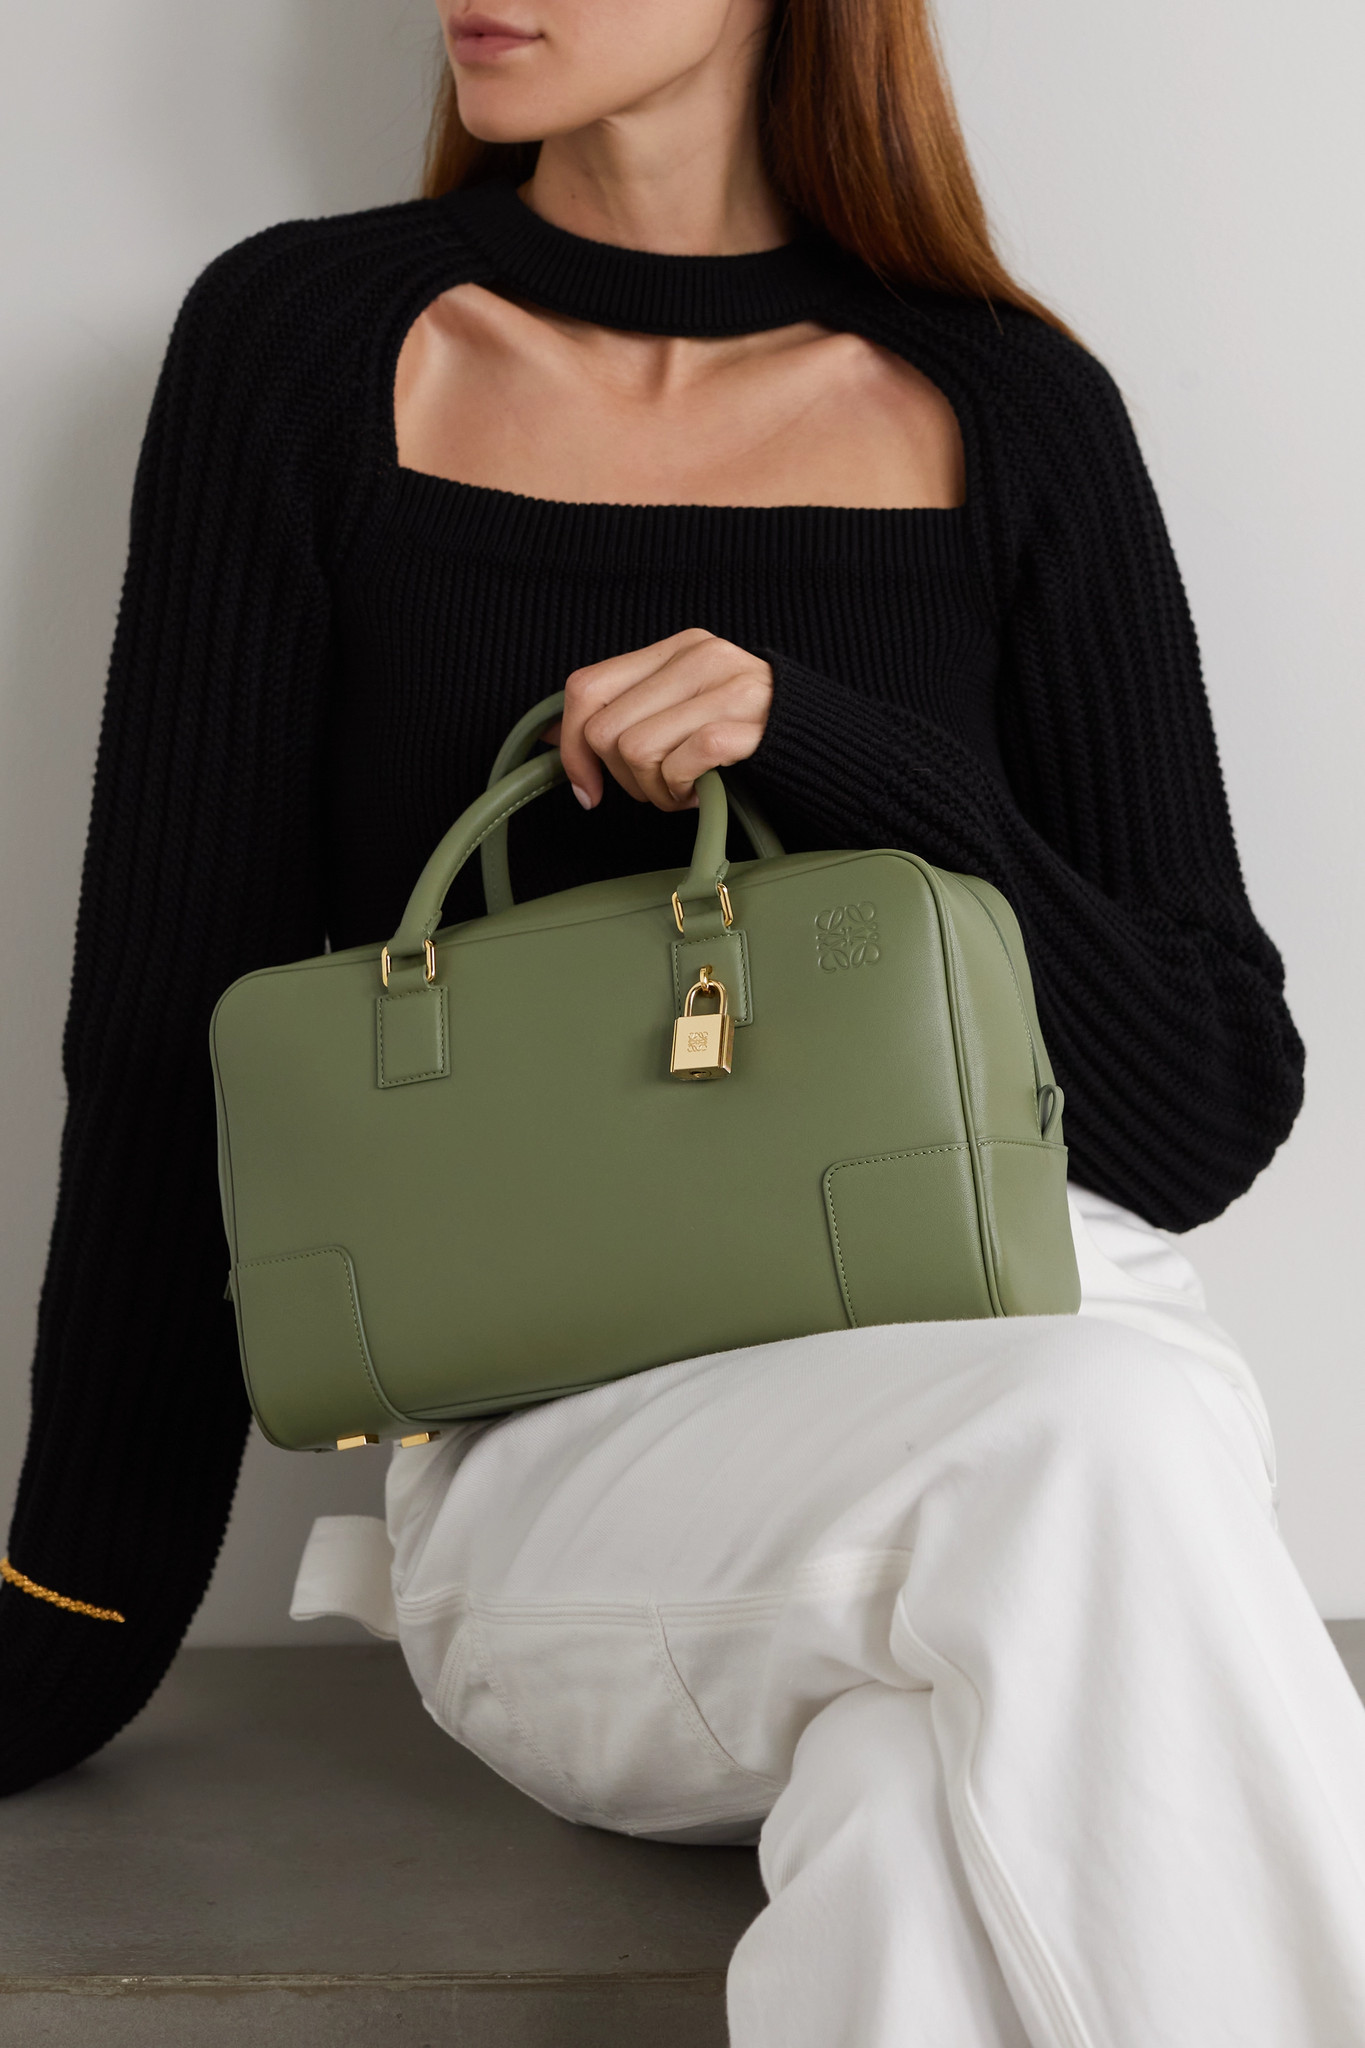 11 of The Best Designer Work Bags with Video #designer #handbags